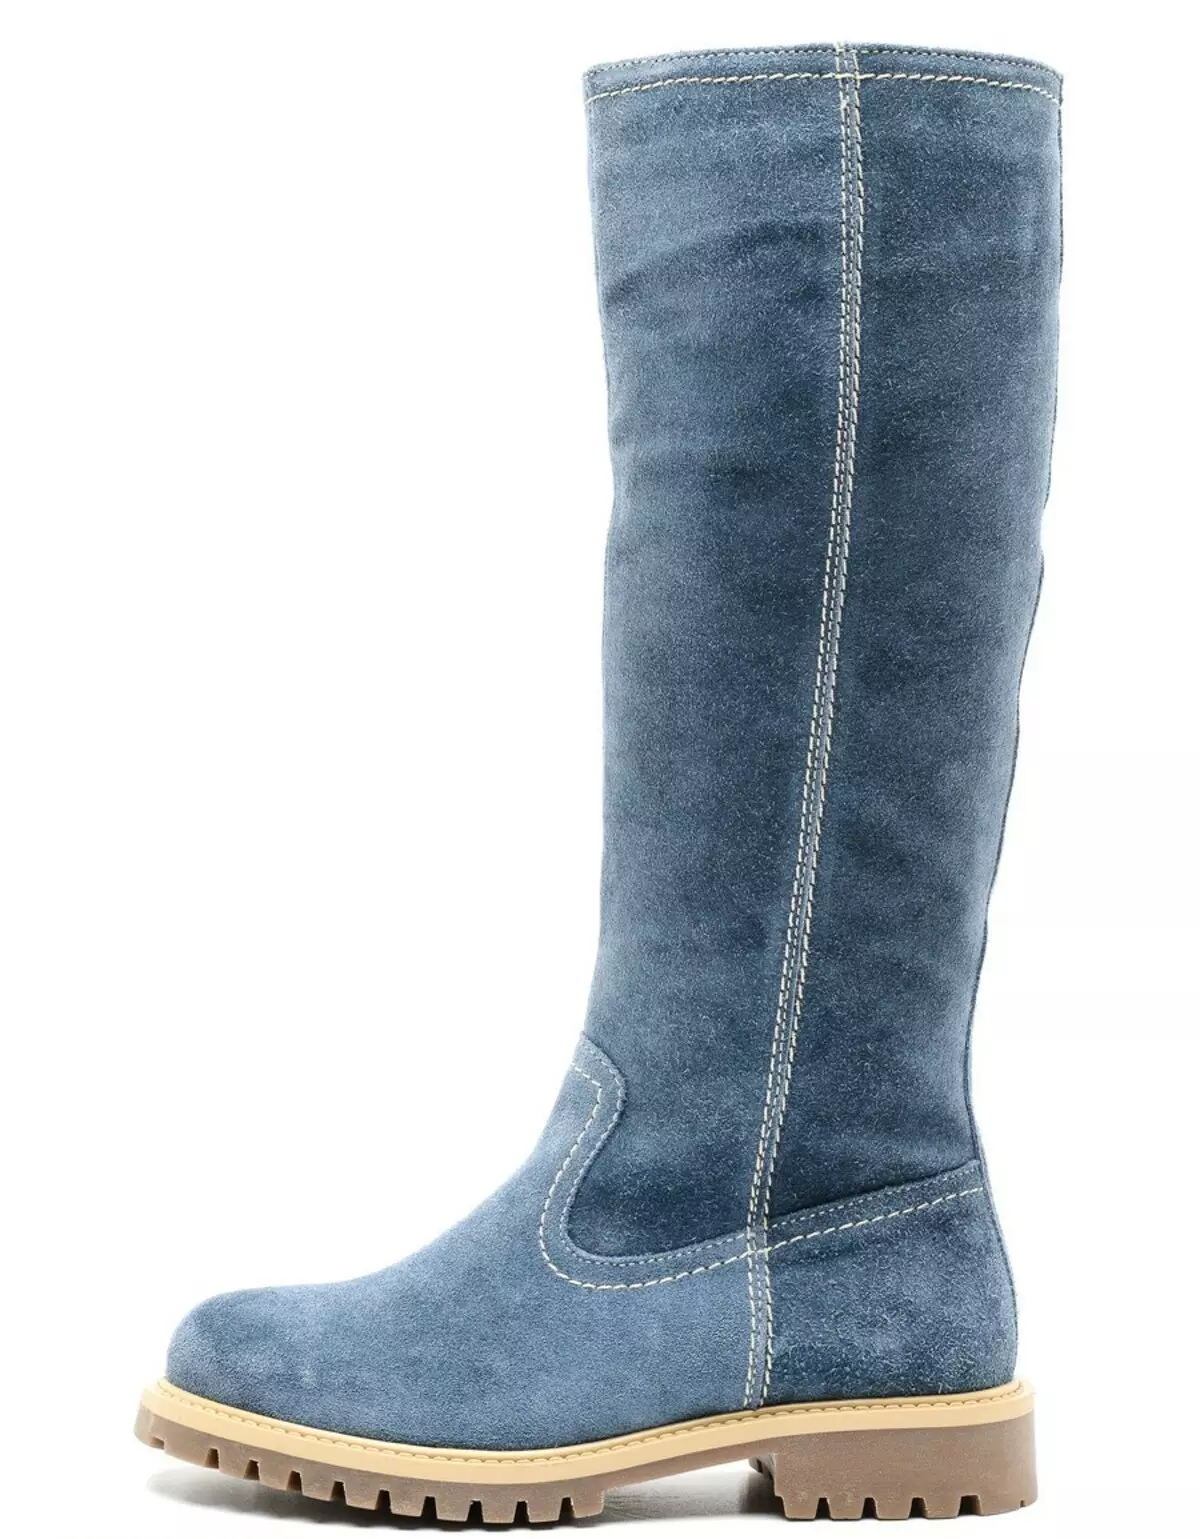 Boots Brand (62 Foto): Model Perempuan Jenama Terkenal 2250_55